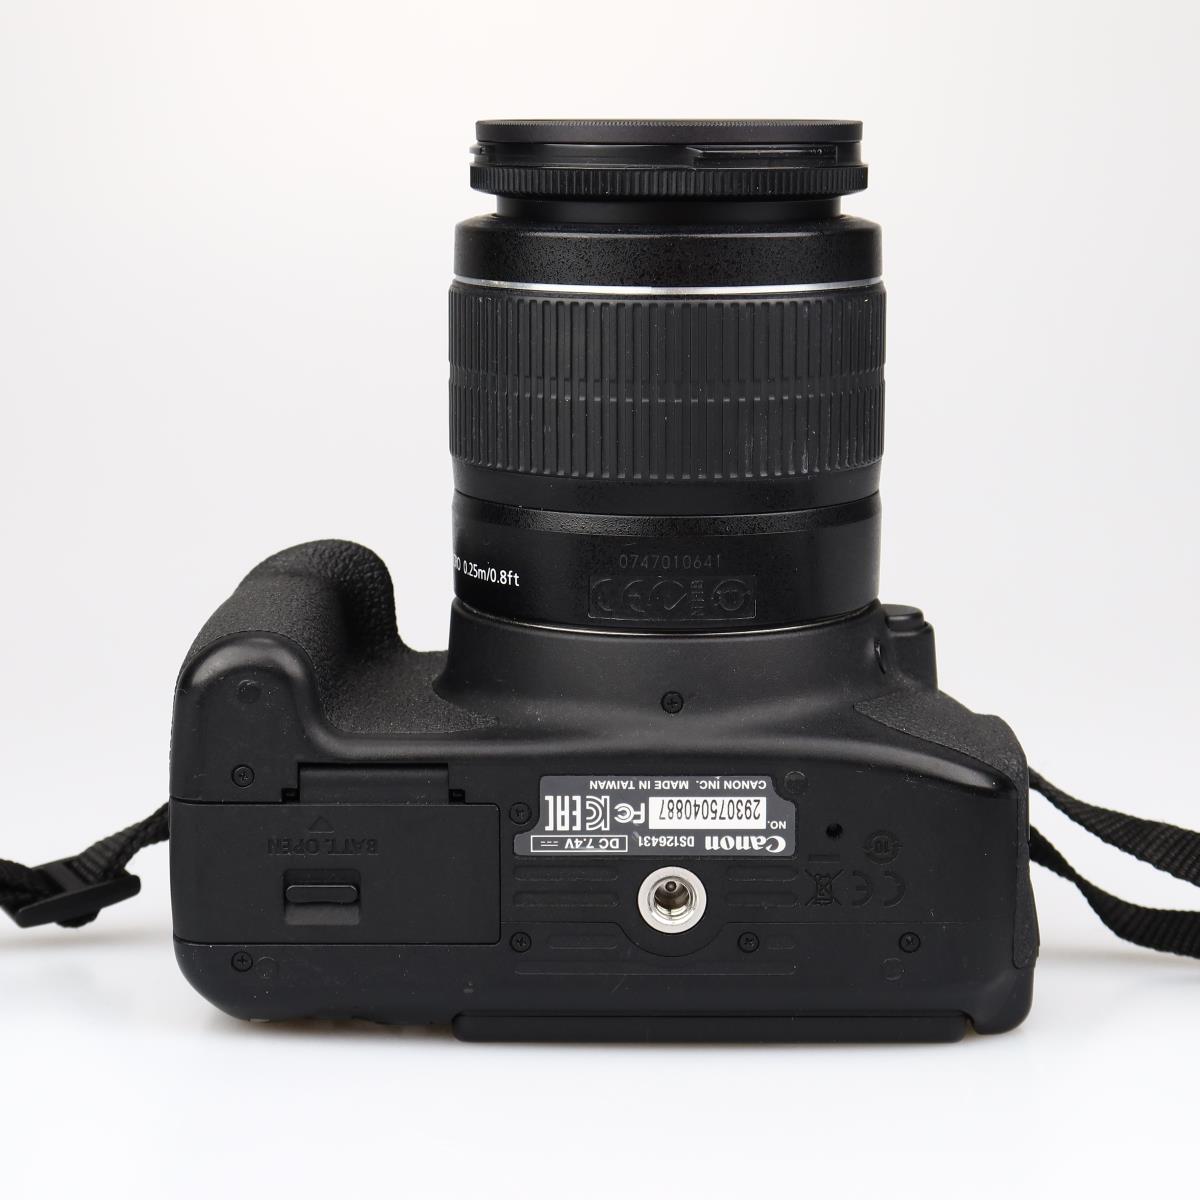 (Myyty) Canon EOS 700D + 18-55mm Kit (SC: 6448) (käytetty)